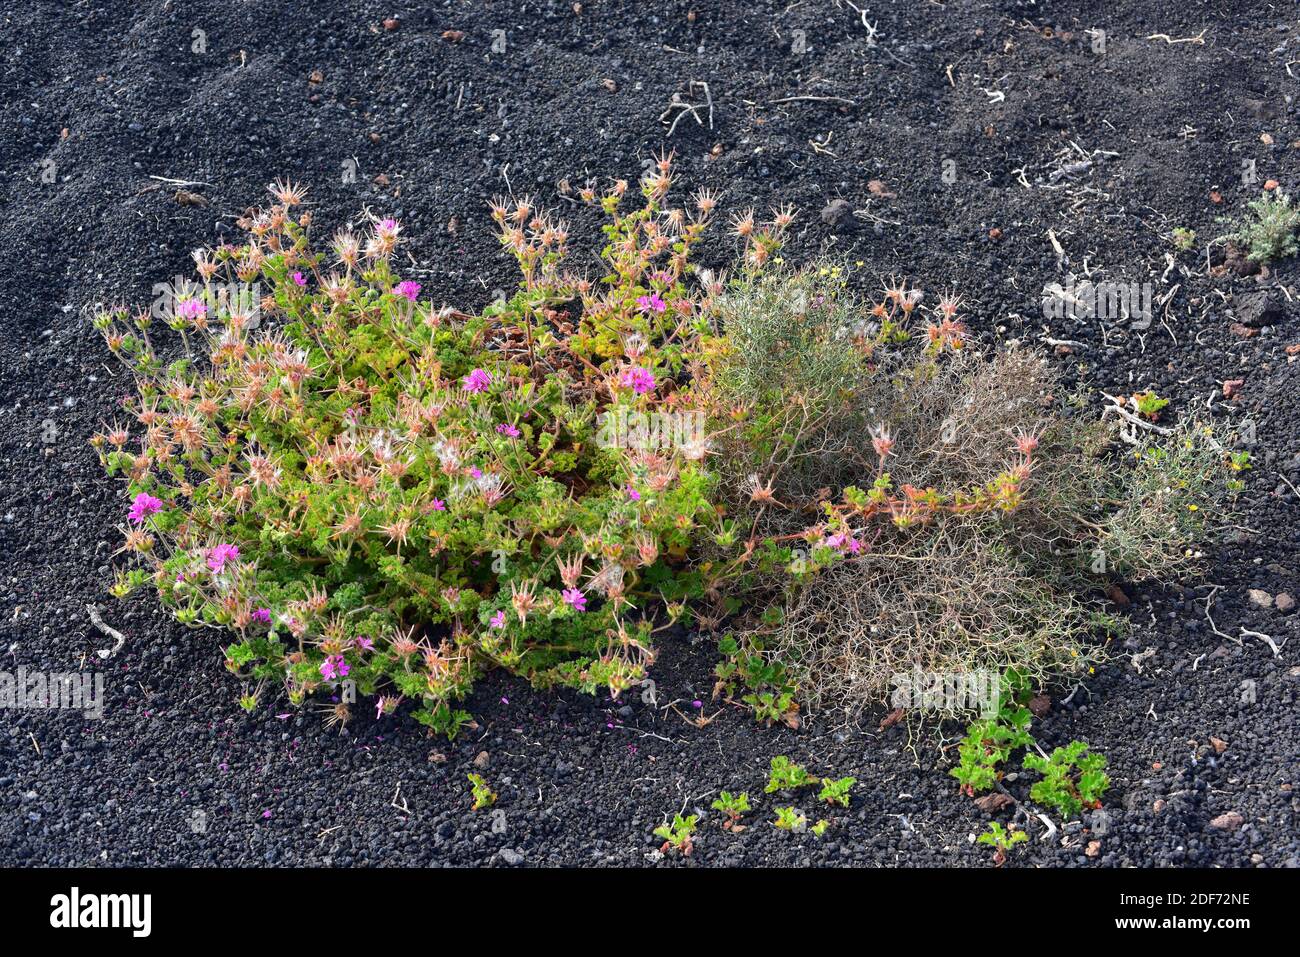 Rose geranium or rose-scented pelargonium (Pelargonium capitatum) is a shrub native to South Africa and naturalized in Canary Islands. This photo was Stock Photo